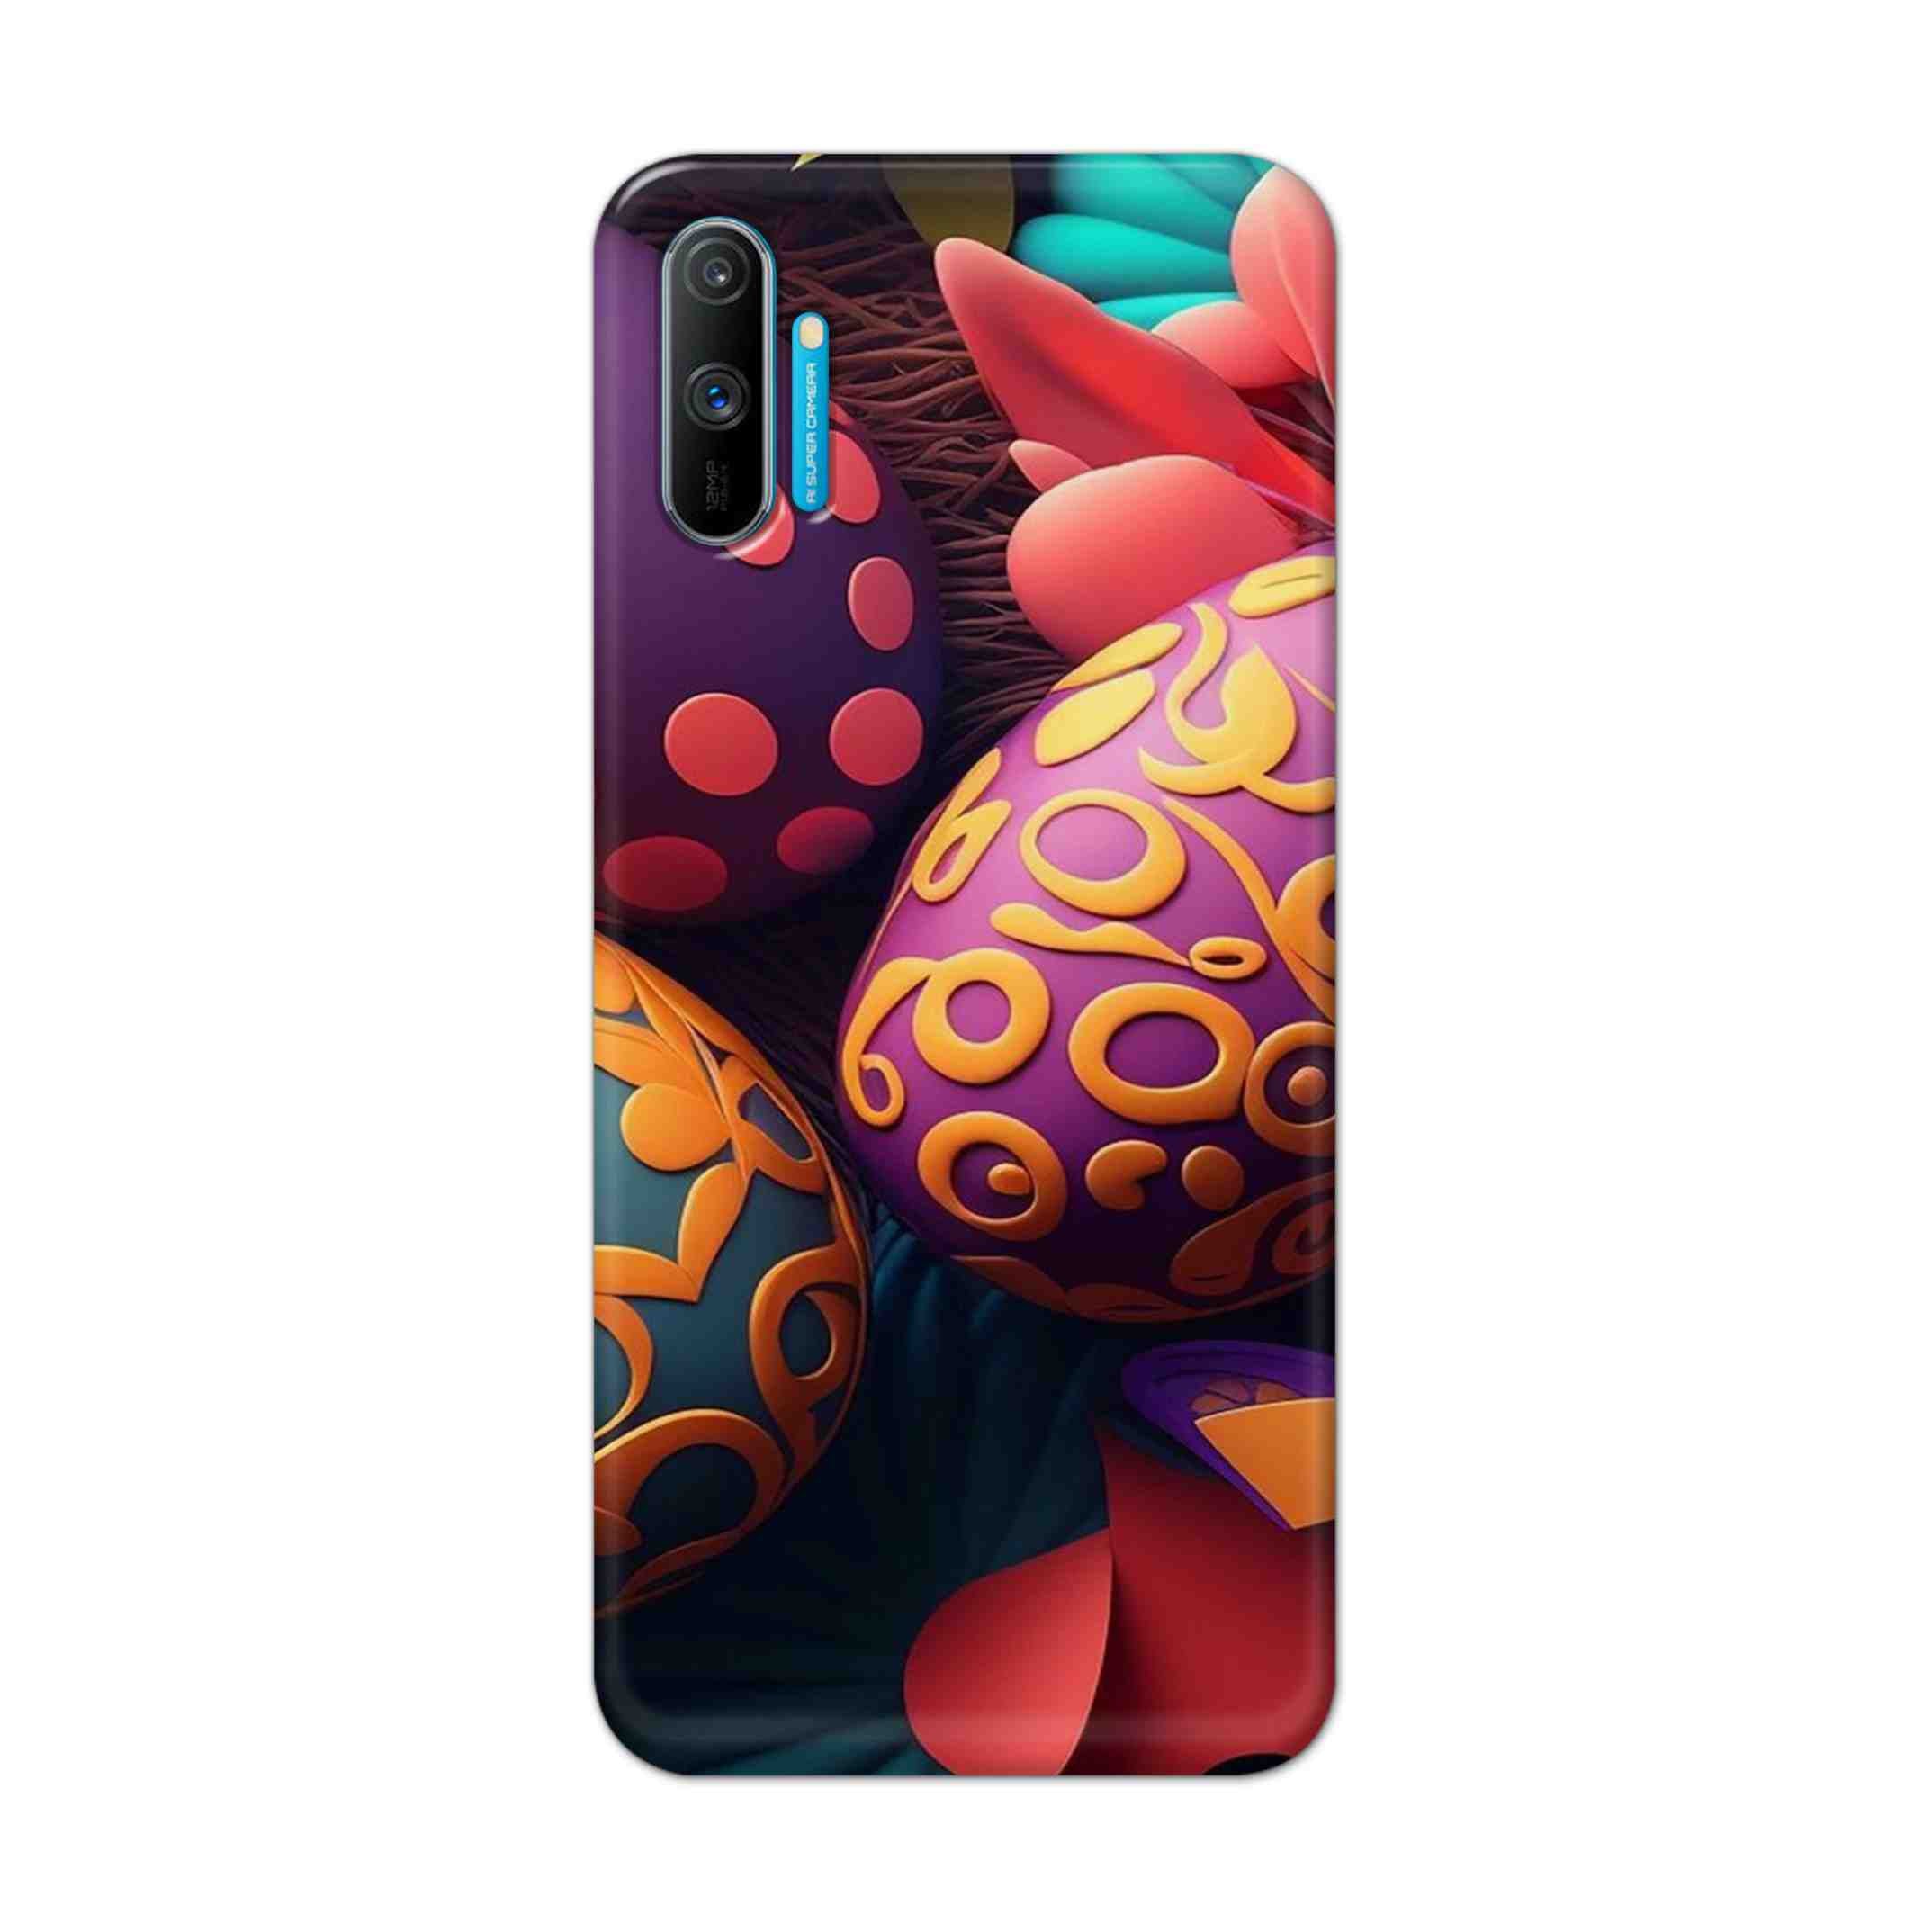 Buy Easter Egg Hard Back Mobile Phone Case Cover For Realme C3 Online